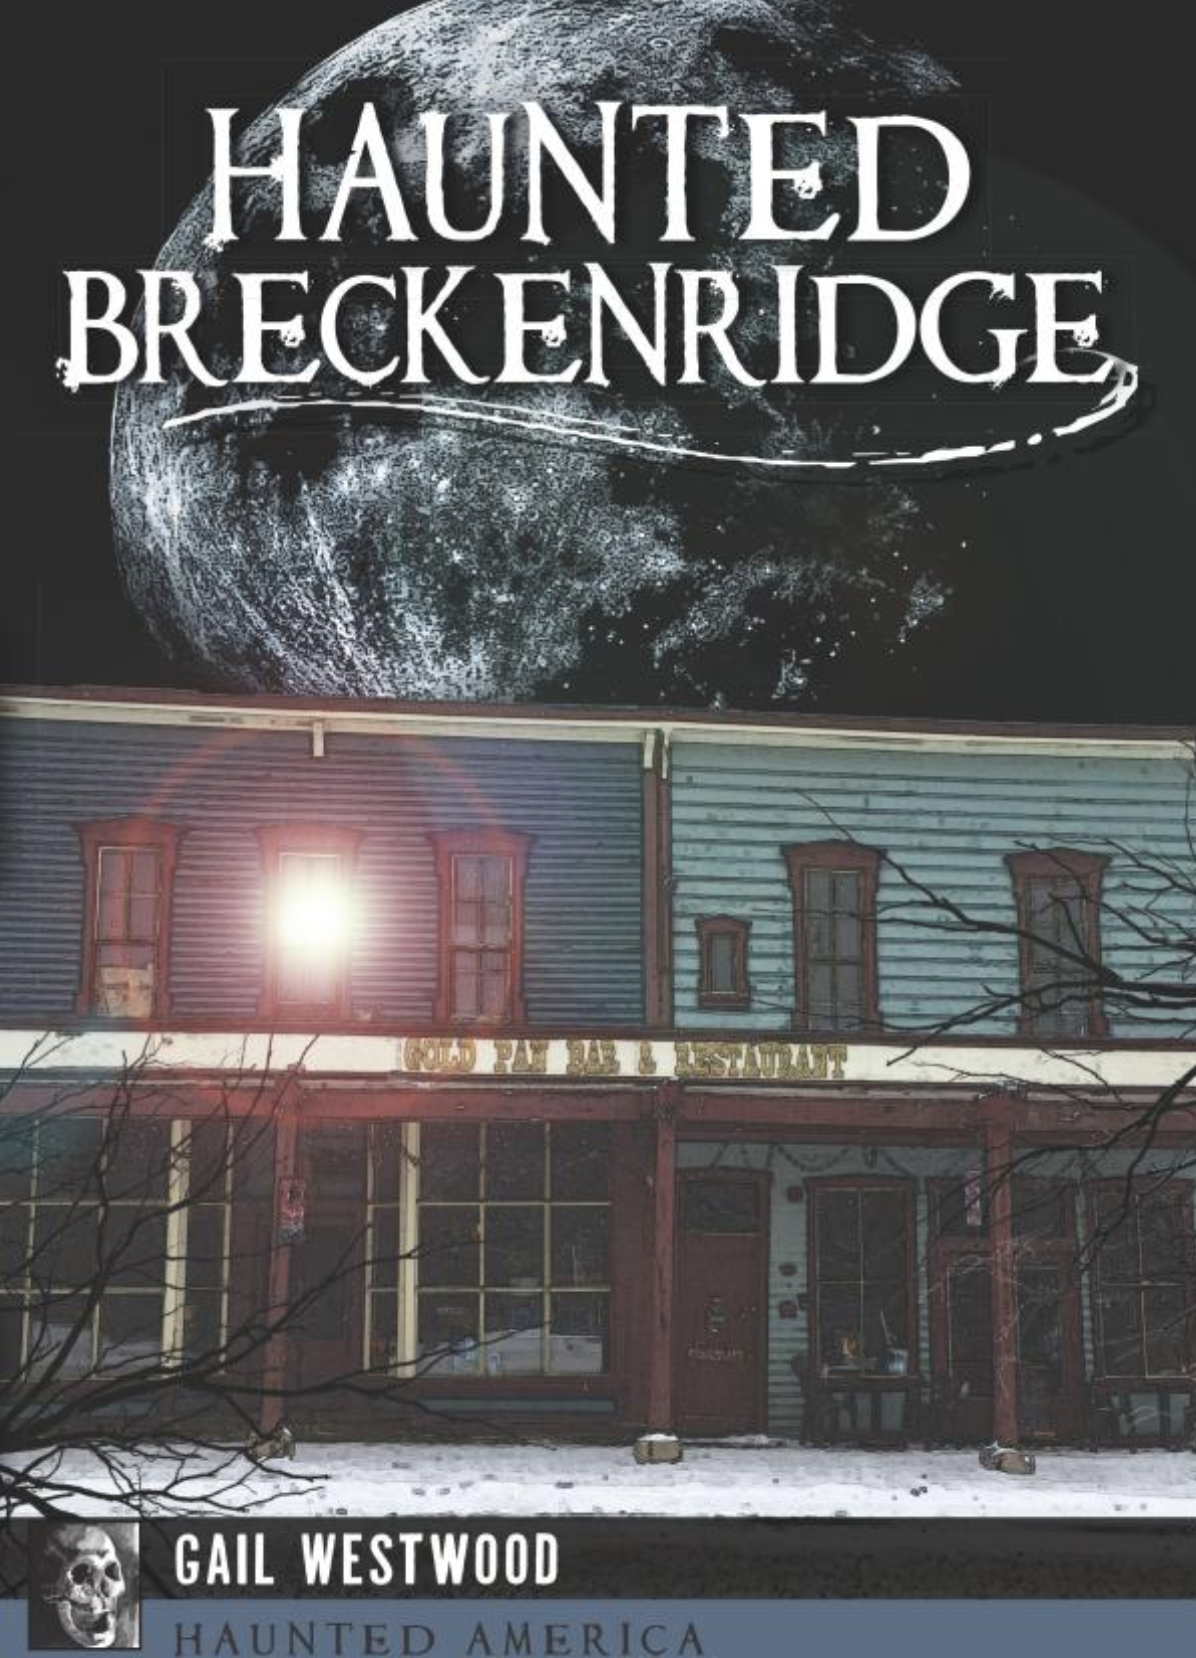 Mysteries of Breckenridge